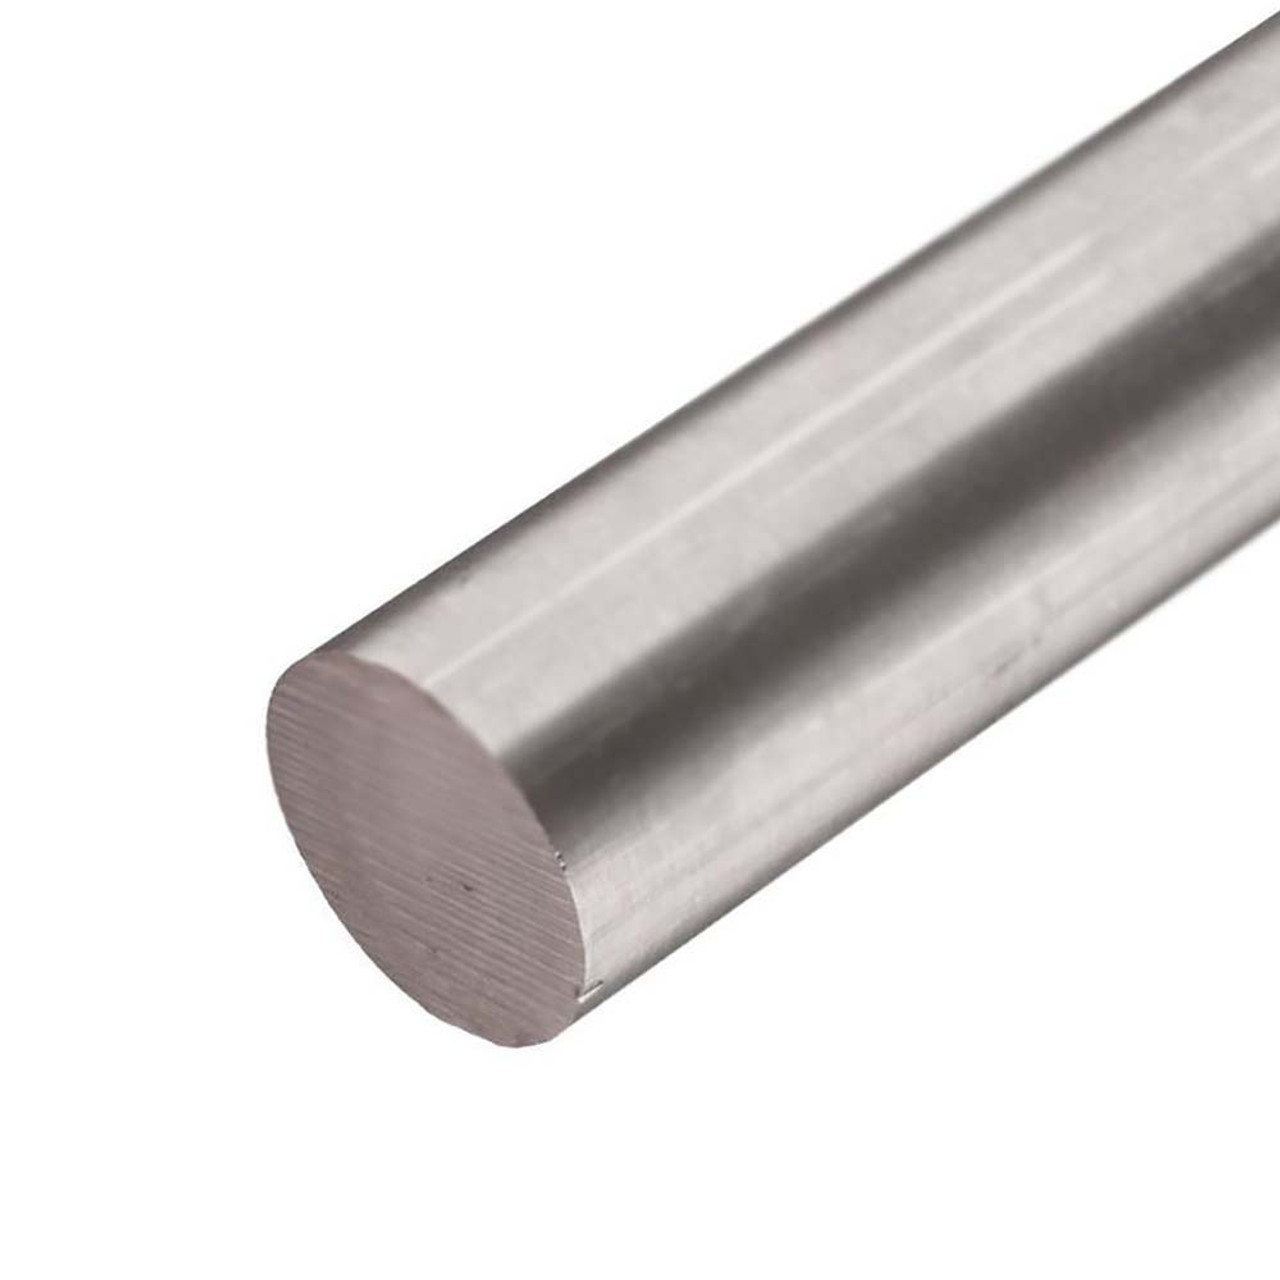 1.750 (1-3/4 inch) x 48 inches, 6061-T6511 Aluminum Round Rod